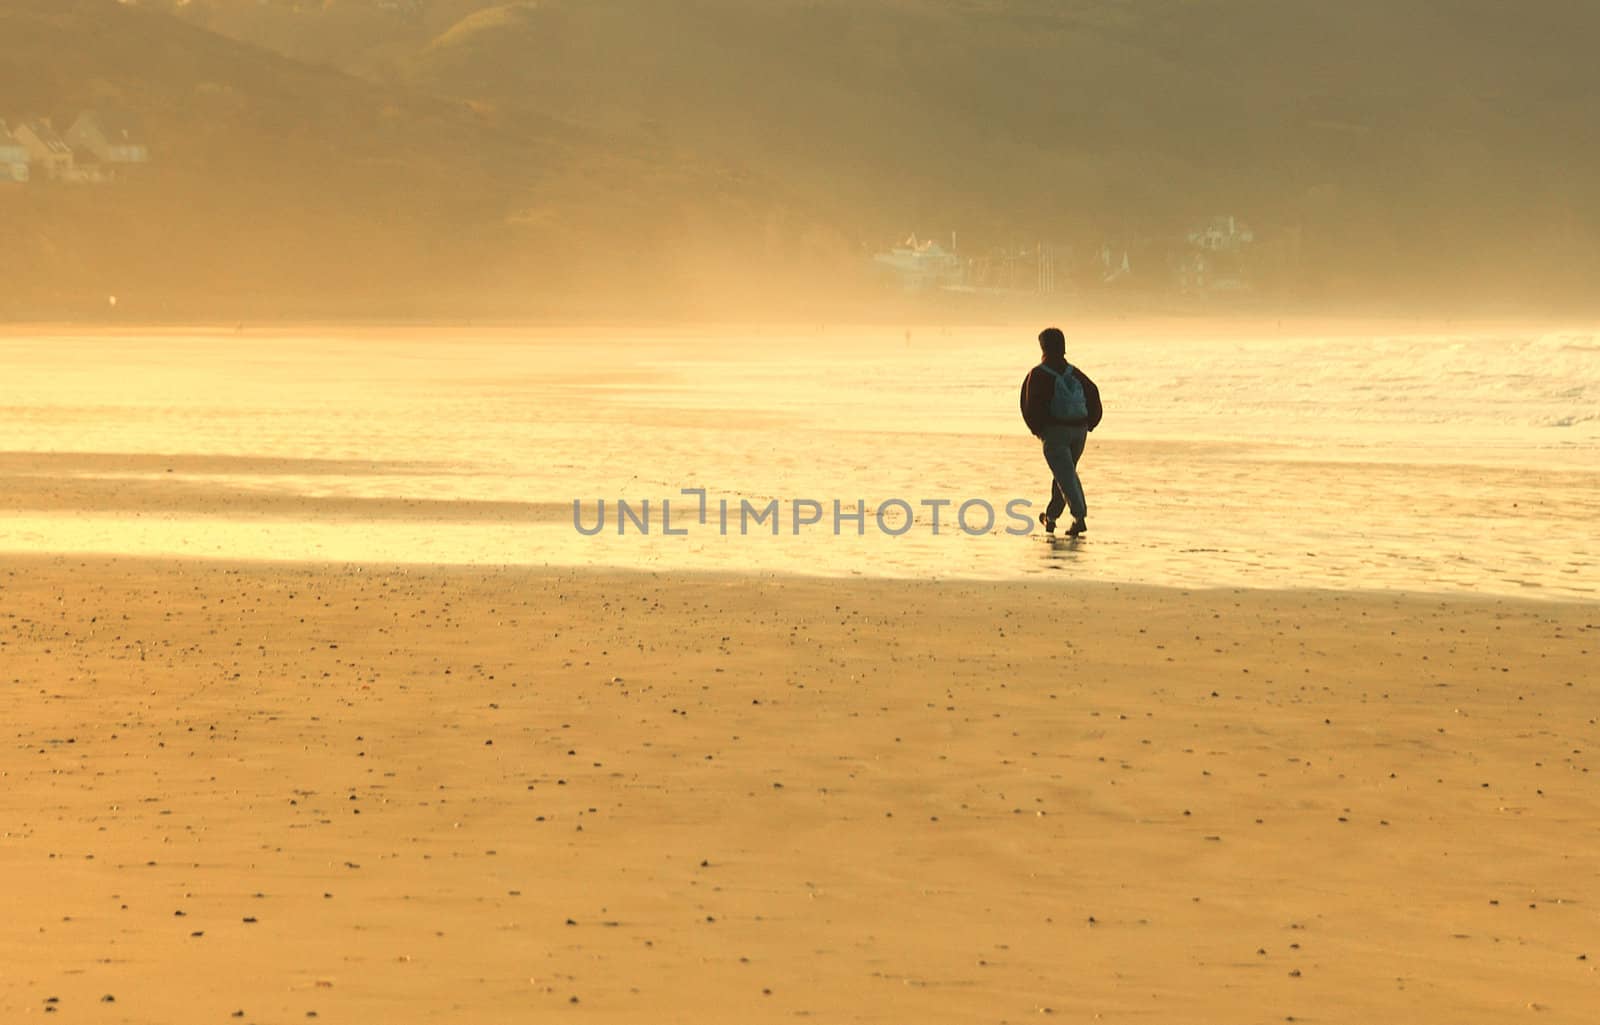 A man walking alone on a beach